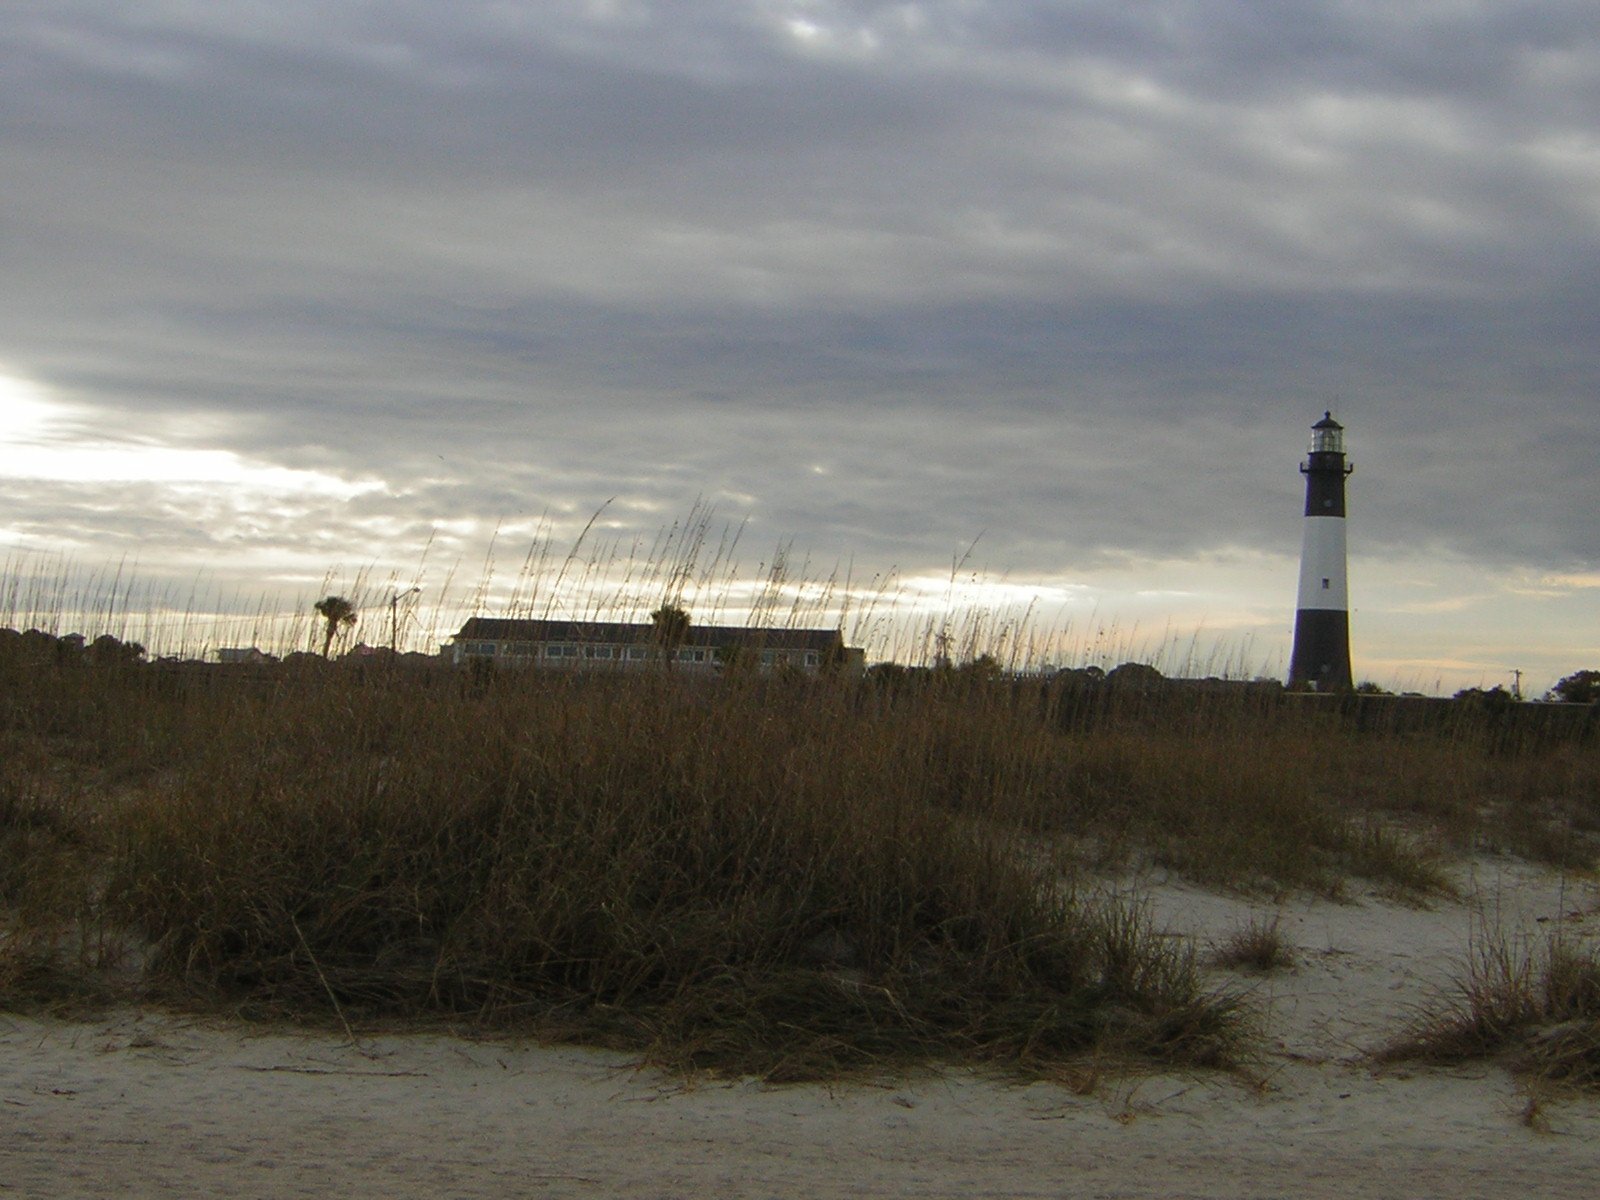 an image of a house and lighthouse on a beach